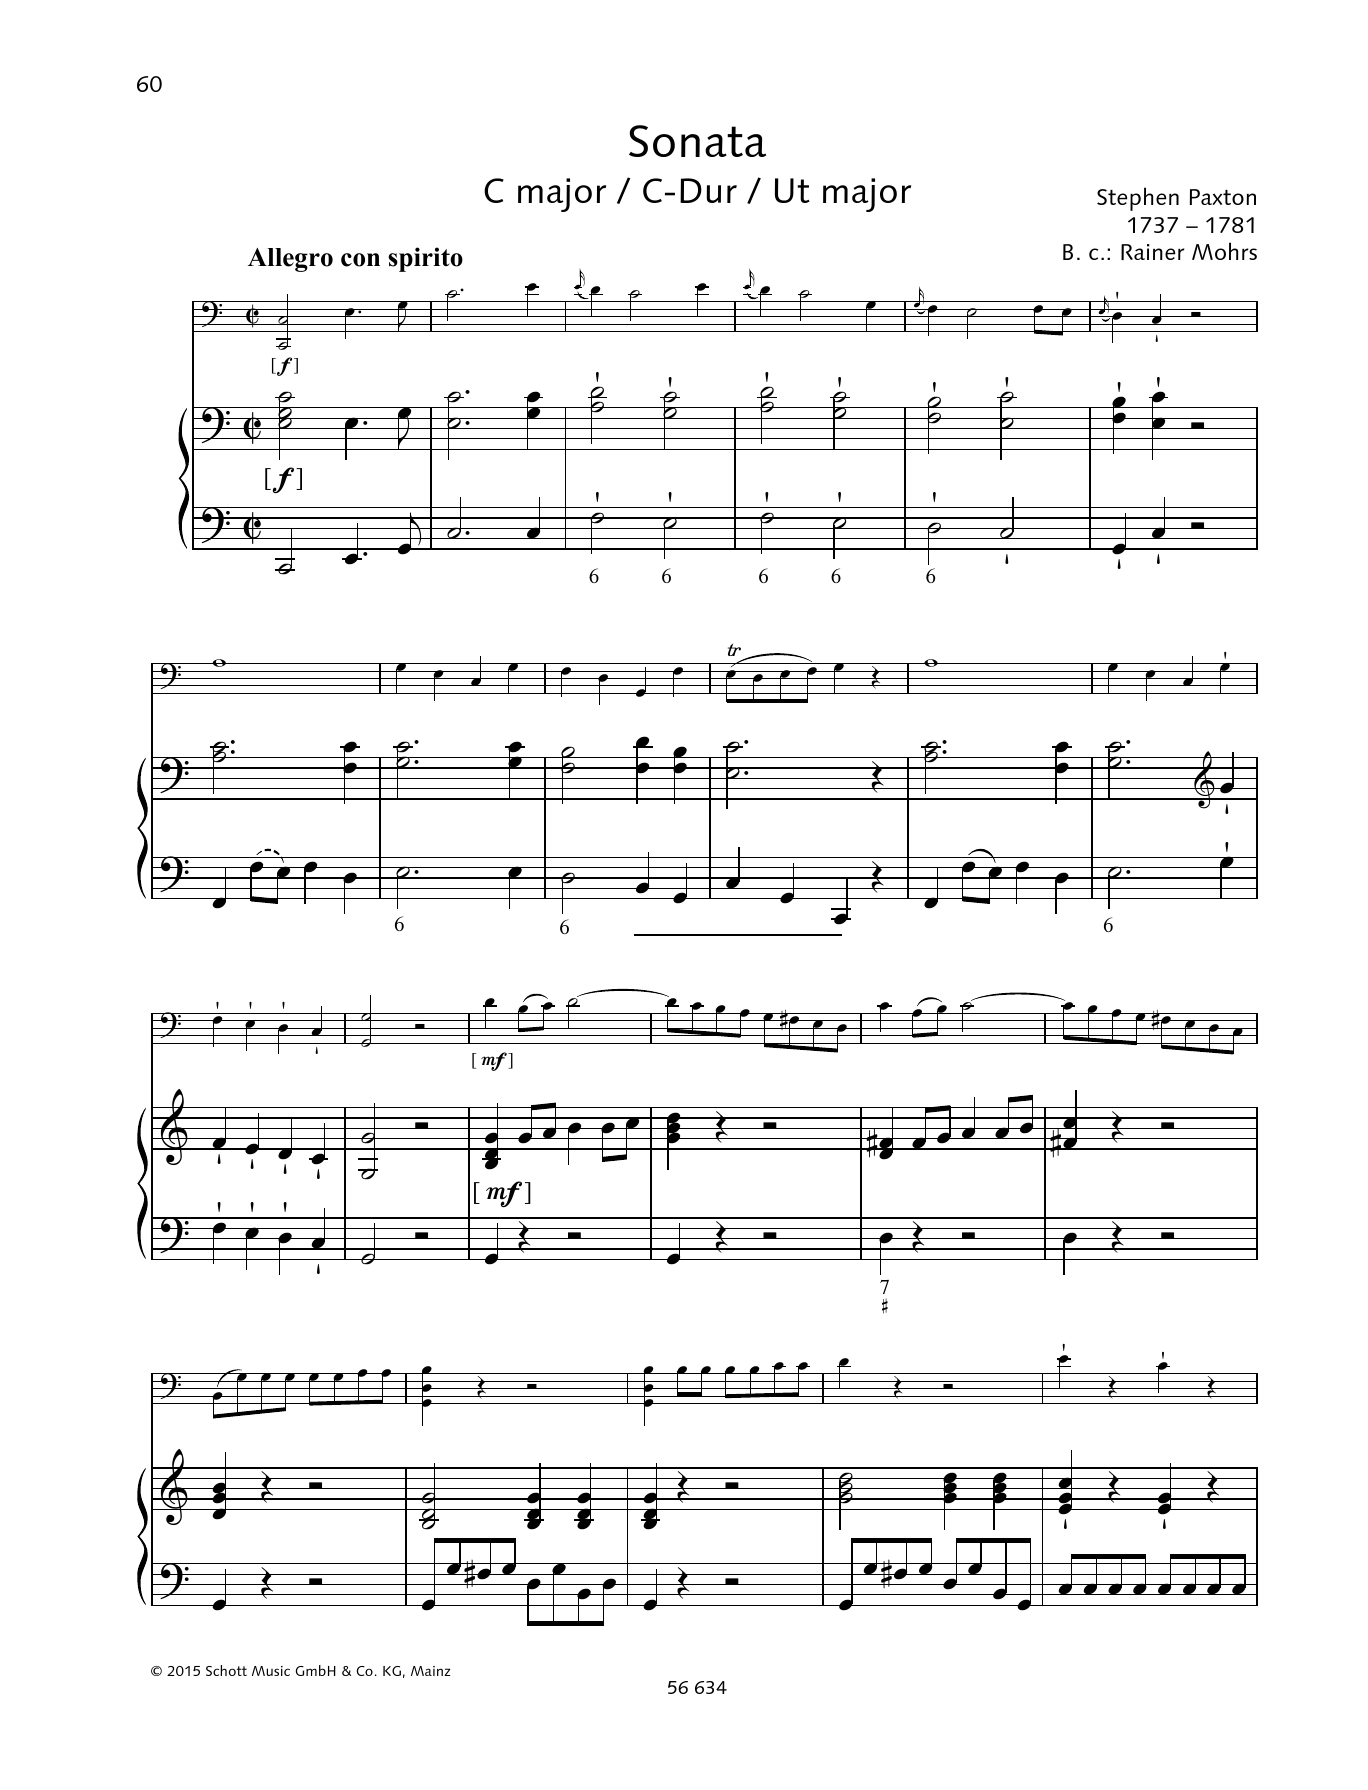 Baldassare Galuppi Sonata C Major sheet music notes and chords. Download Printable PDF.